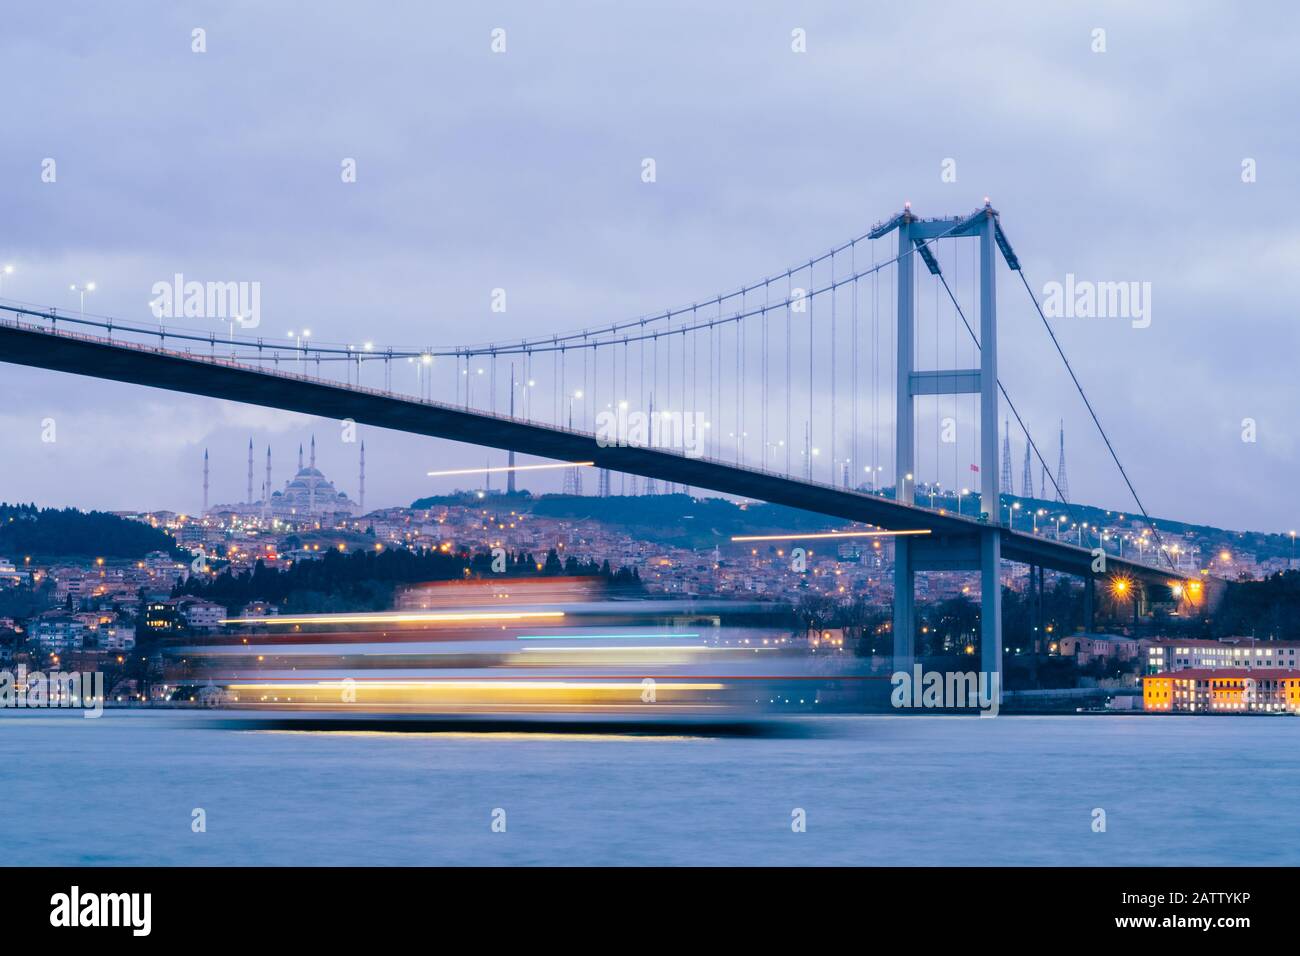 Istanbul, Turkey - Jan 13, 2020: Sunset or Dusk over the First Bosporus Bridge Crossing the Bosphorus or Bosporus Straits Istanbul Turkey. Büyük Çamlı Stock Photo